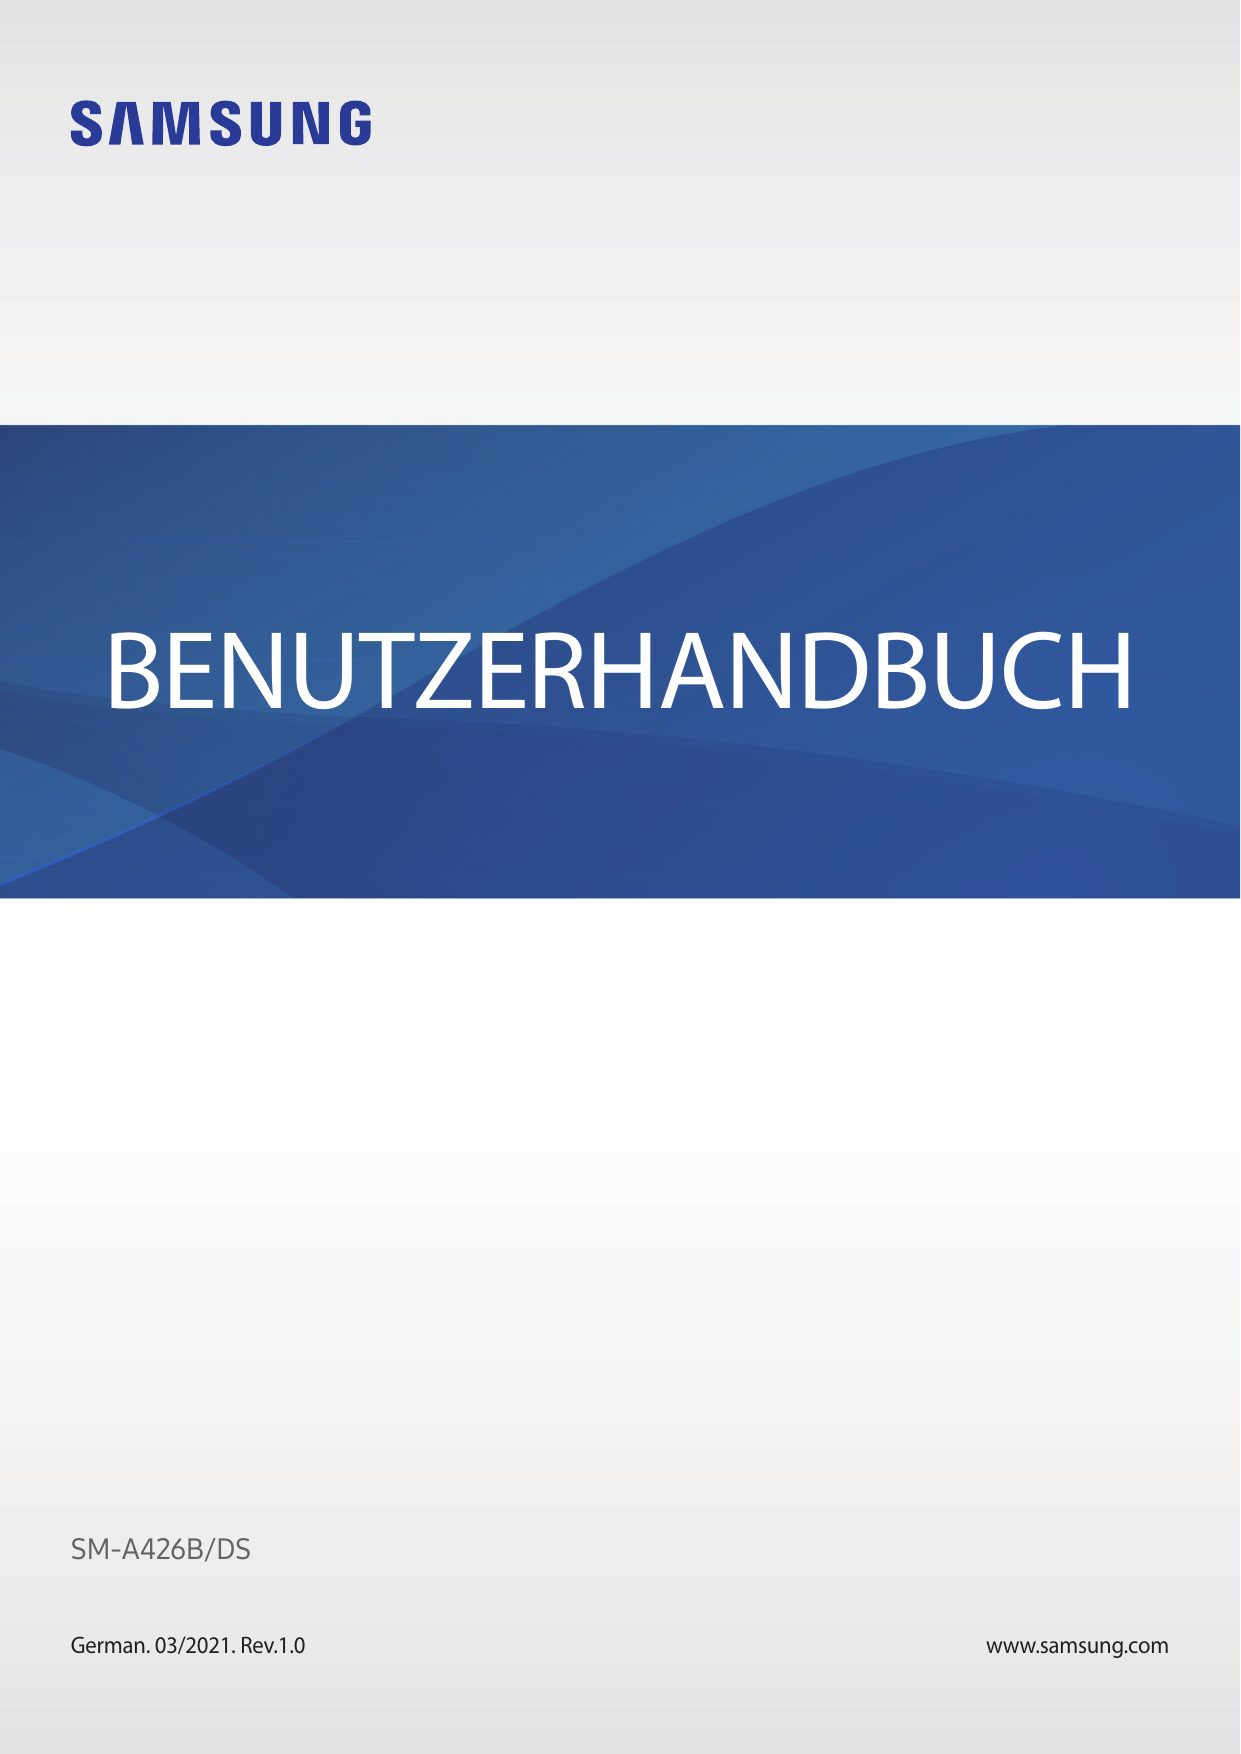 BENUTZERHANDBUCHSM-A426B/DSGerman. 03/2021. Rev.1.0www.samsung.com